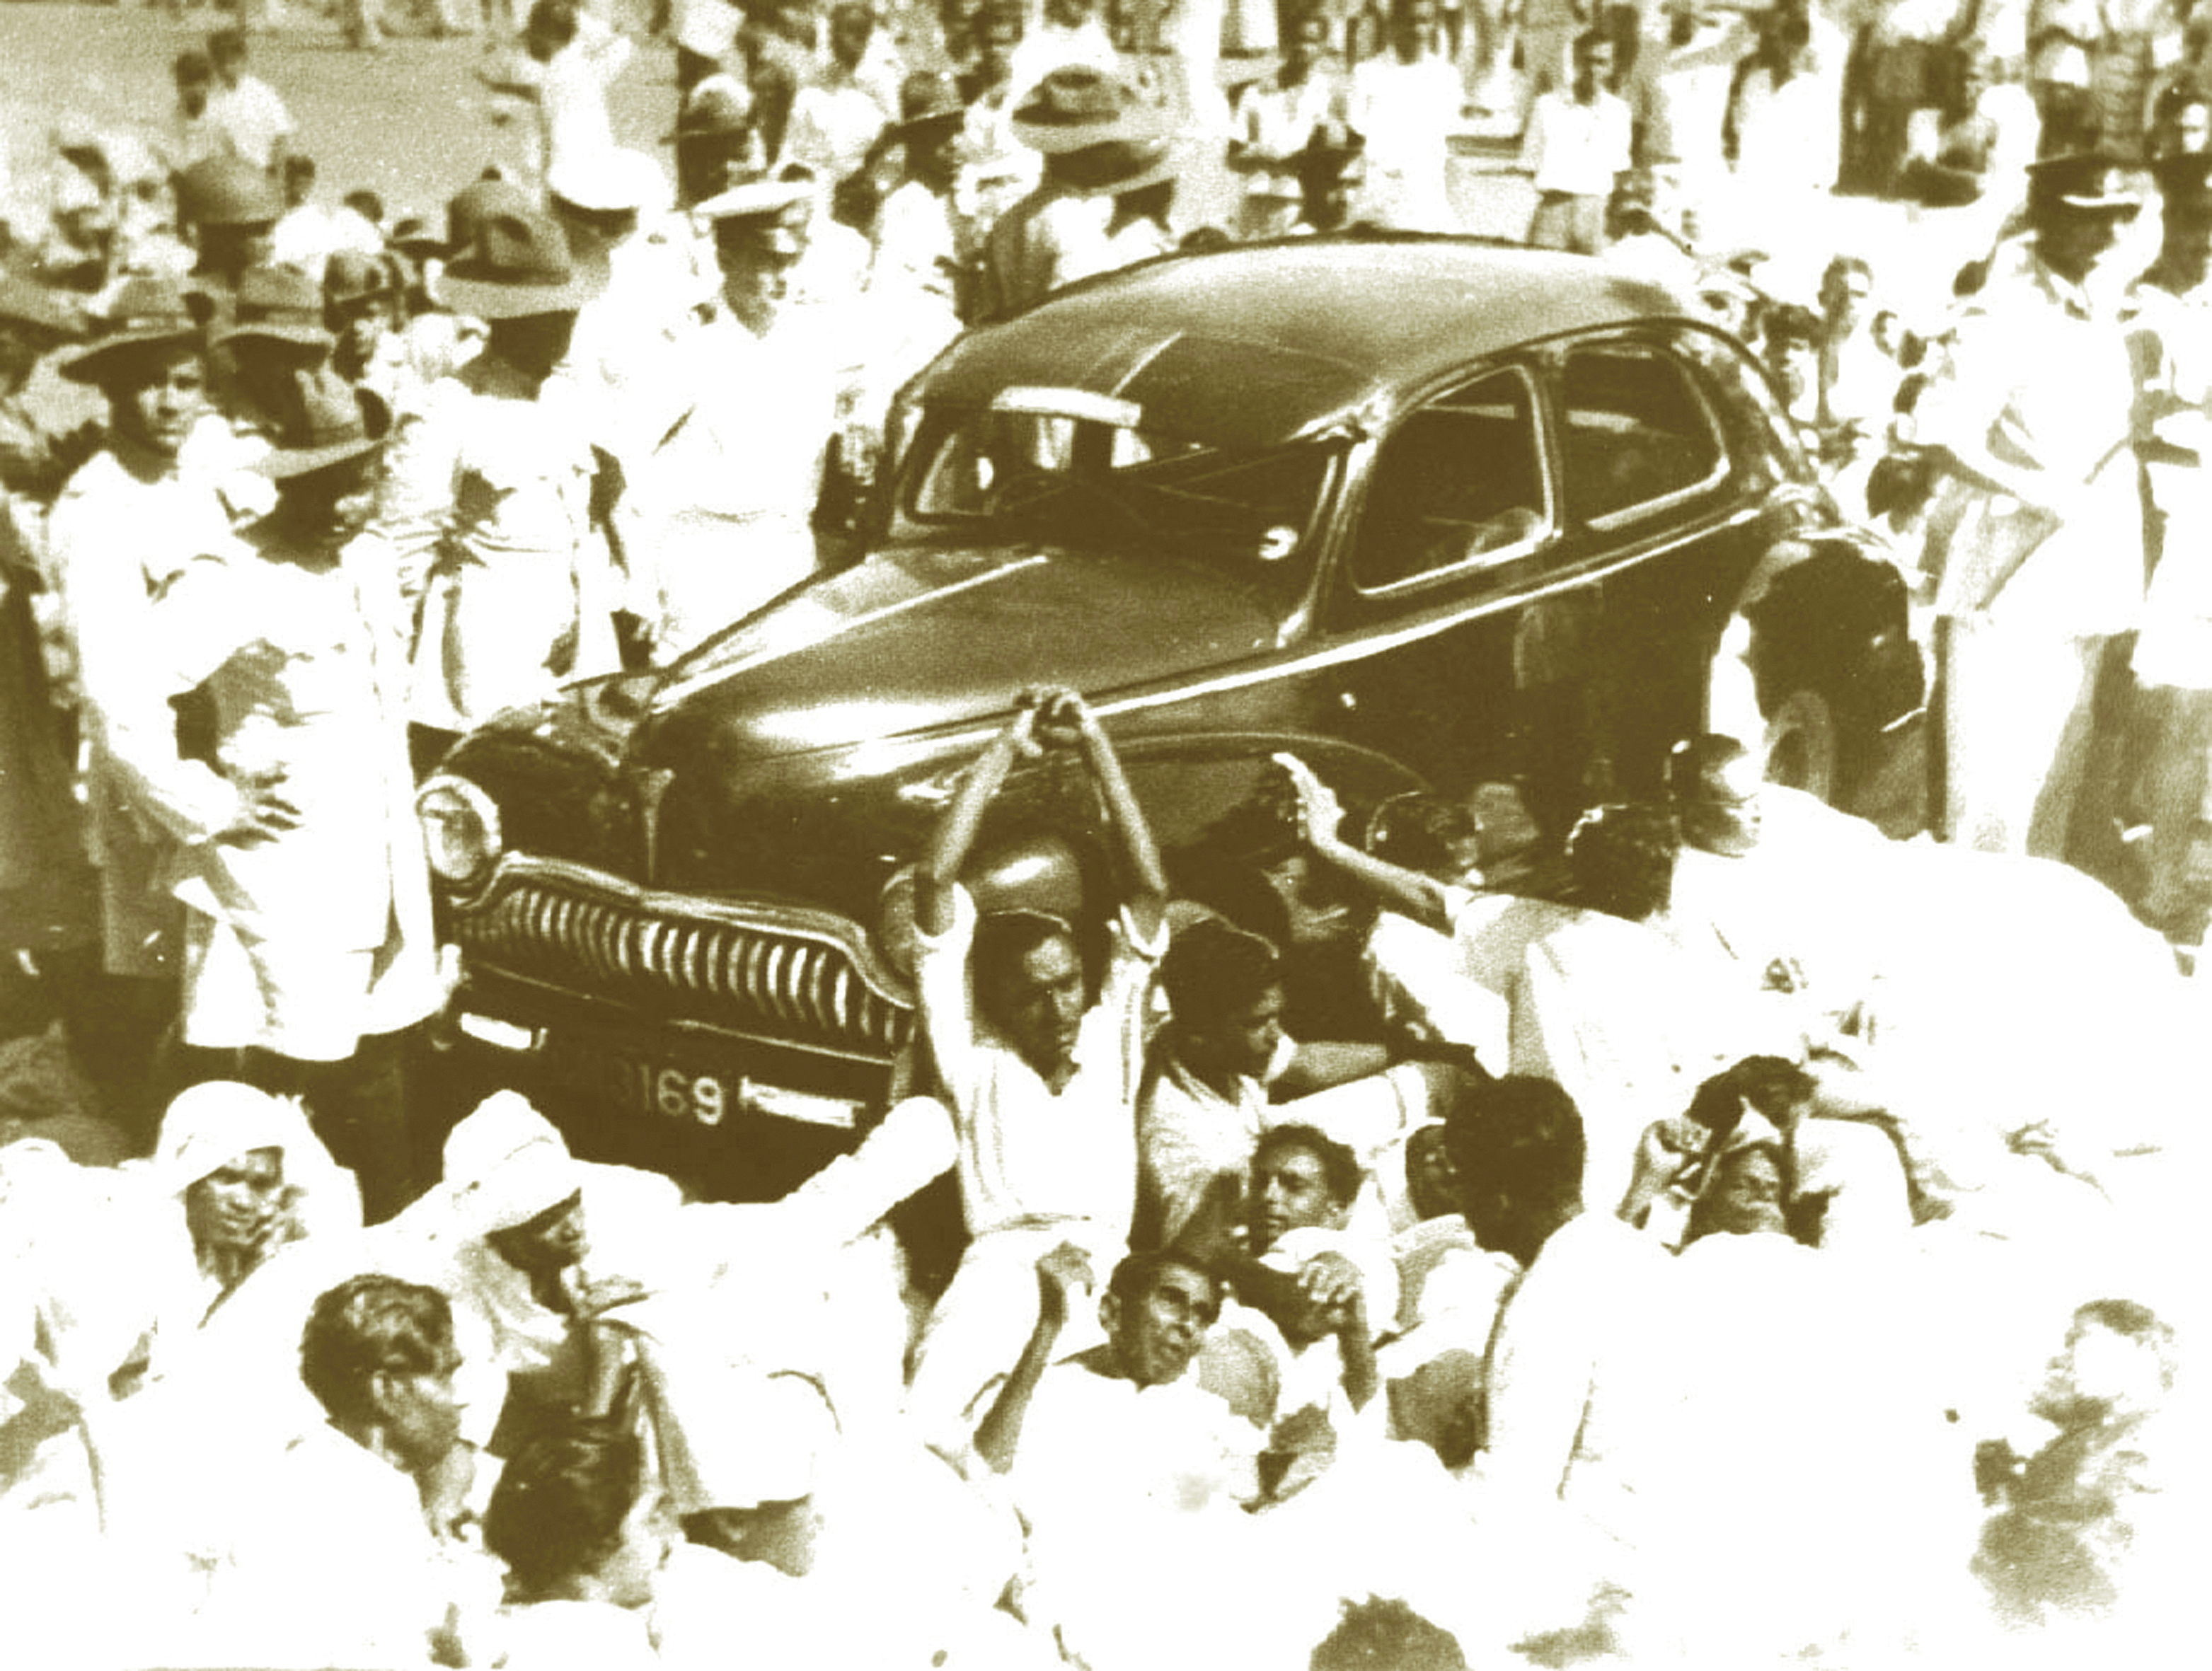 Attacks on Tamil protestors. July 1957 Colombo Sri Lanka